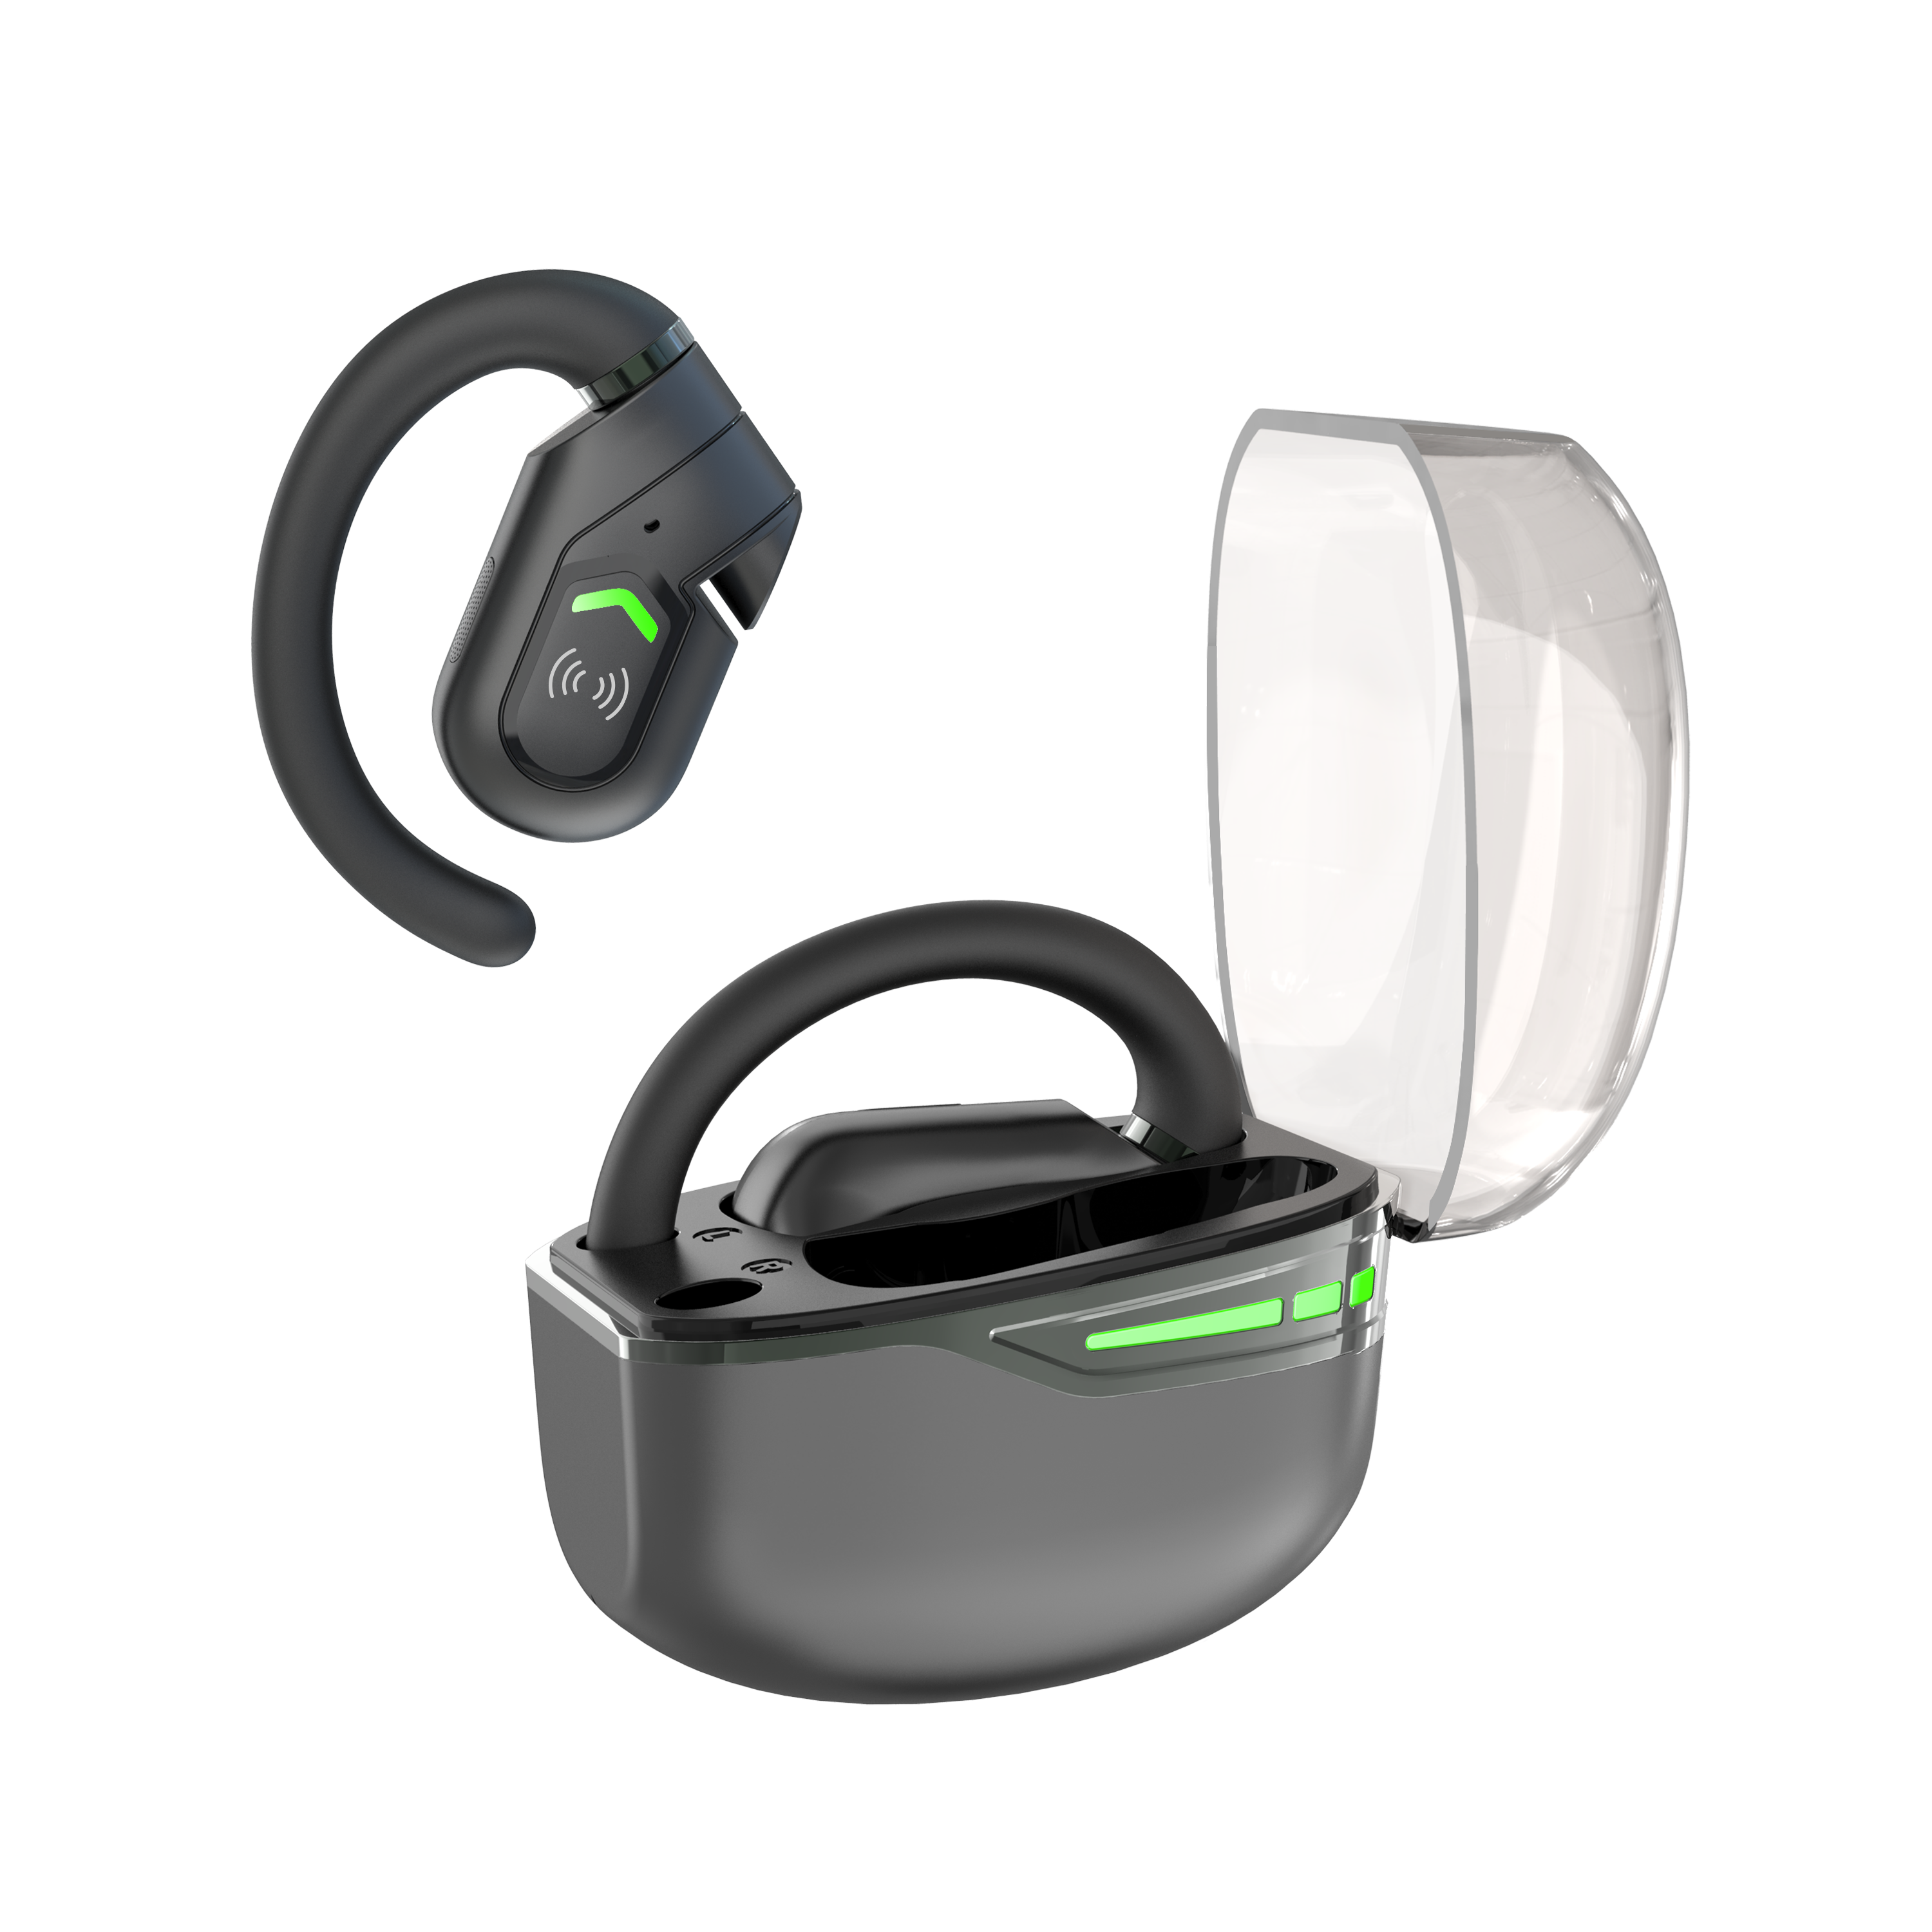 OPENEAR Headphone，Bluetooth Headphone